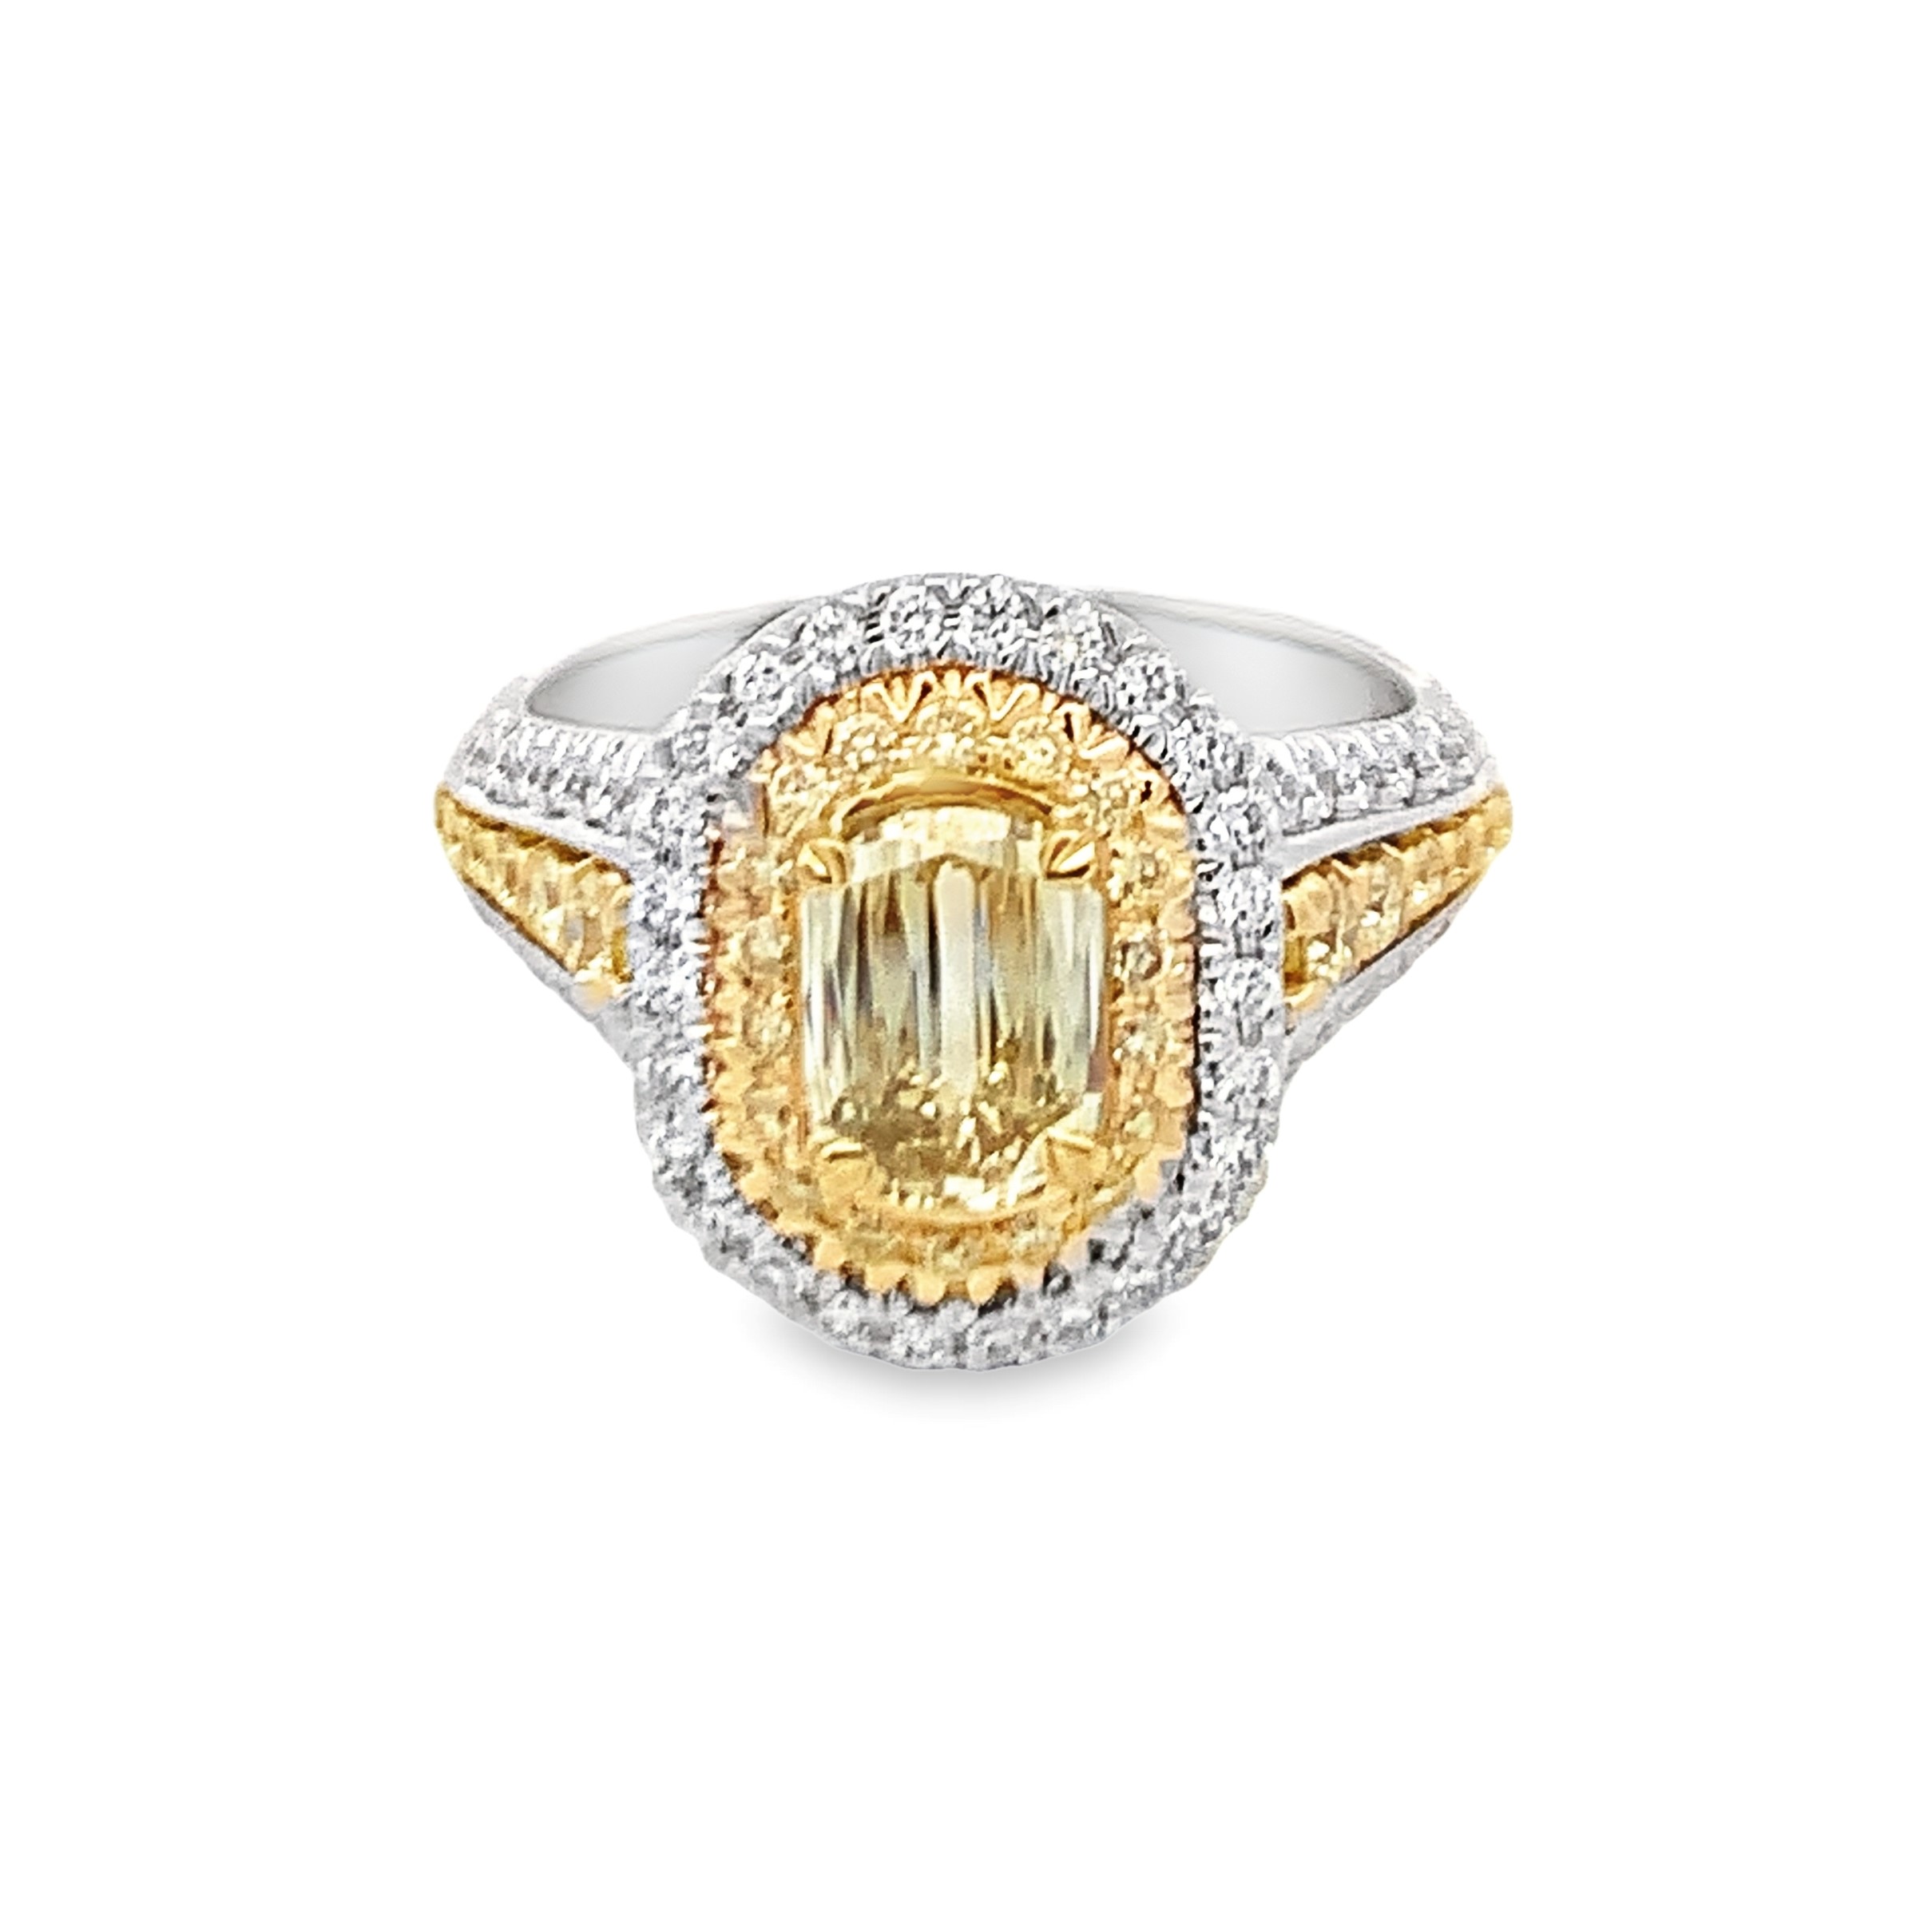 Christopher Designs 18 Karat White & Yellow Gold Double Halo Yellow Diamond Engagement Ring